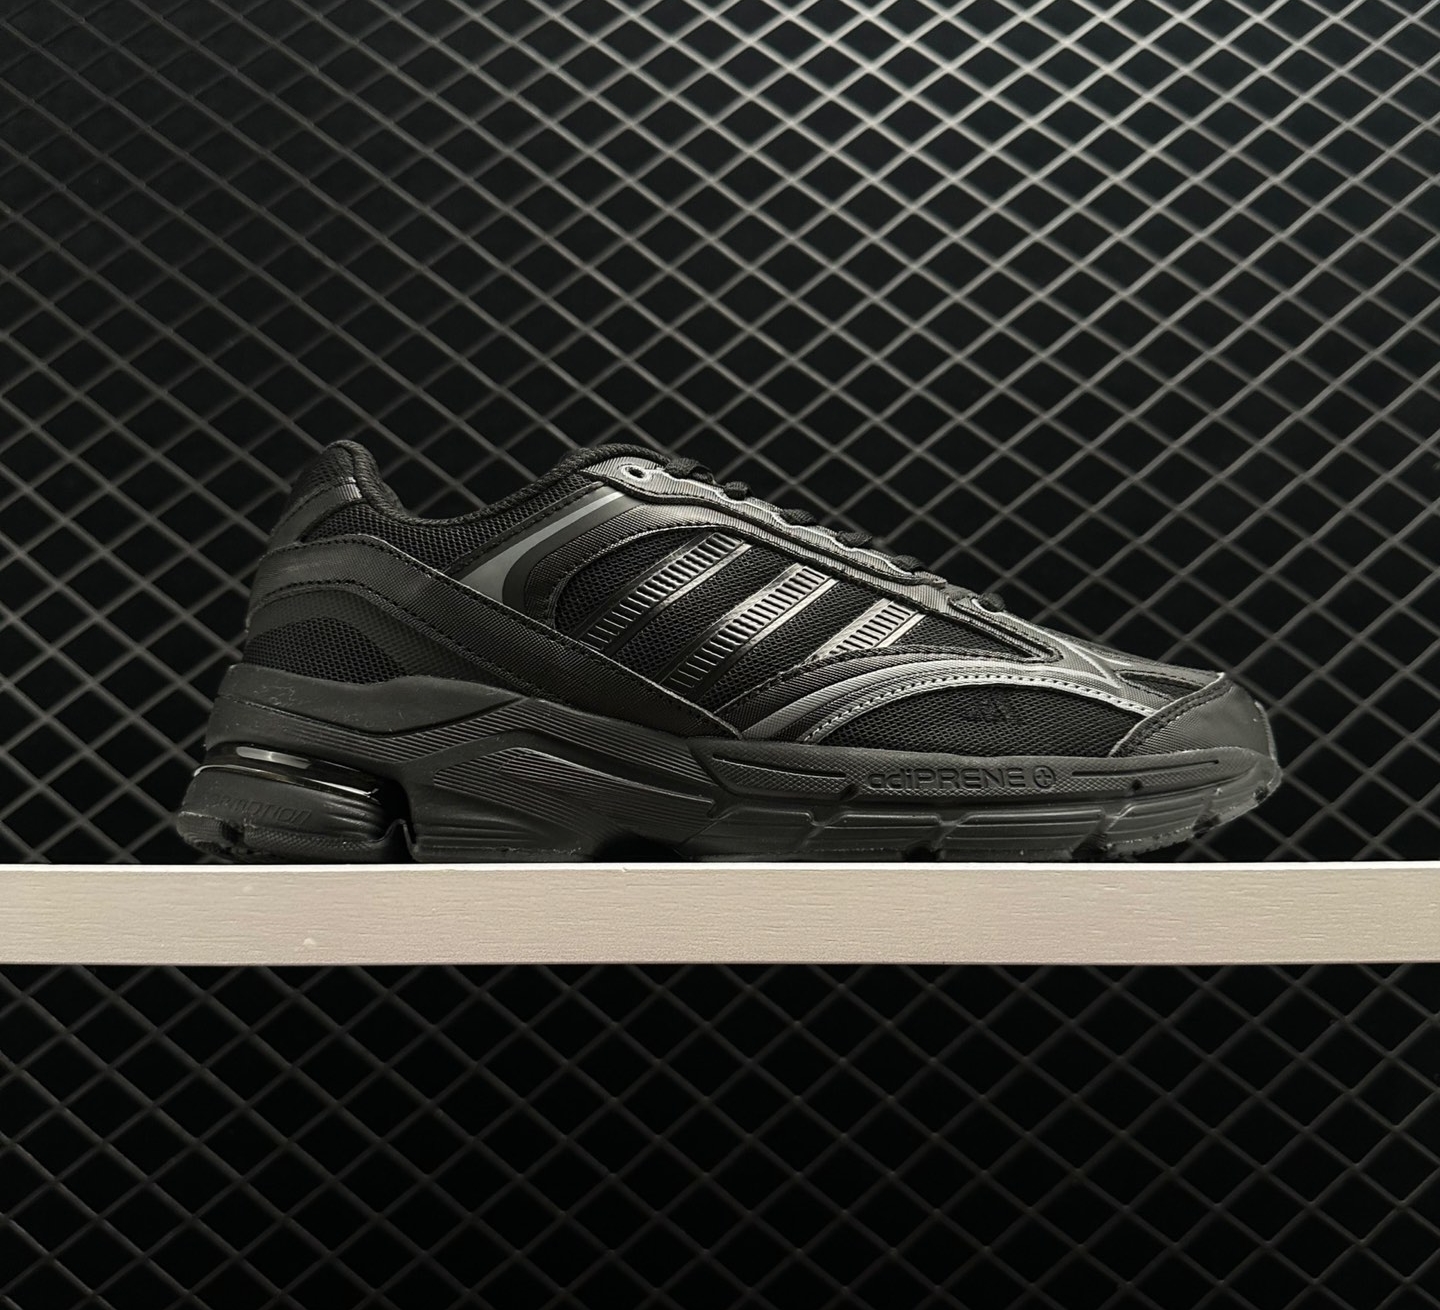 Adidas Spiritain 2000 Triple Black Core Black - Stylish and Performance Focused Sneakers